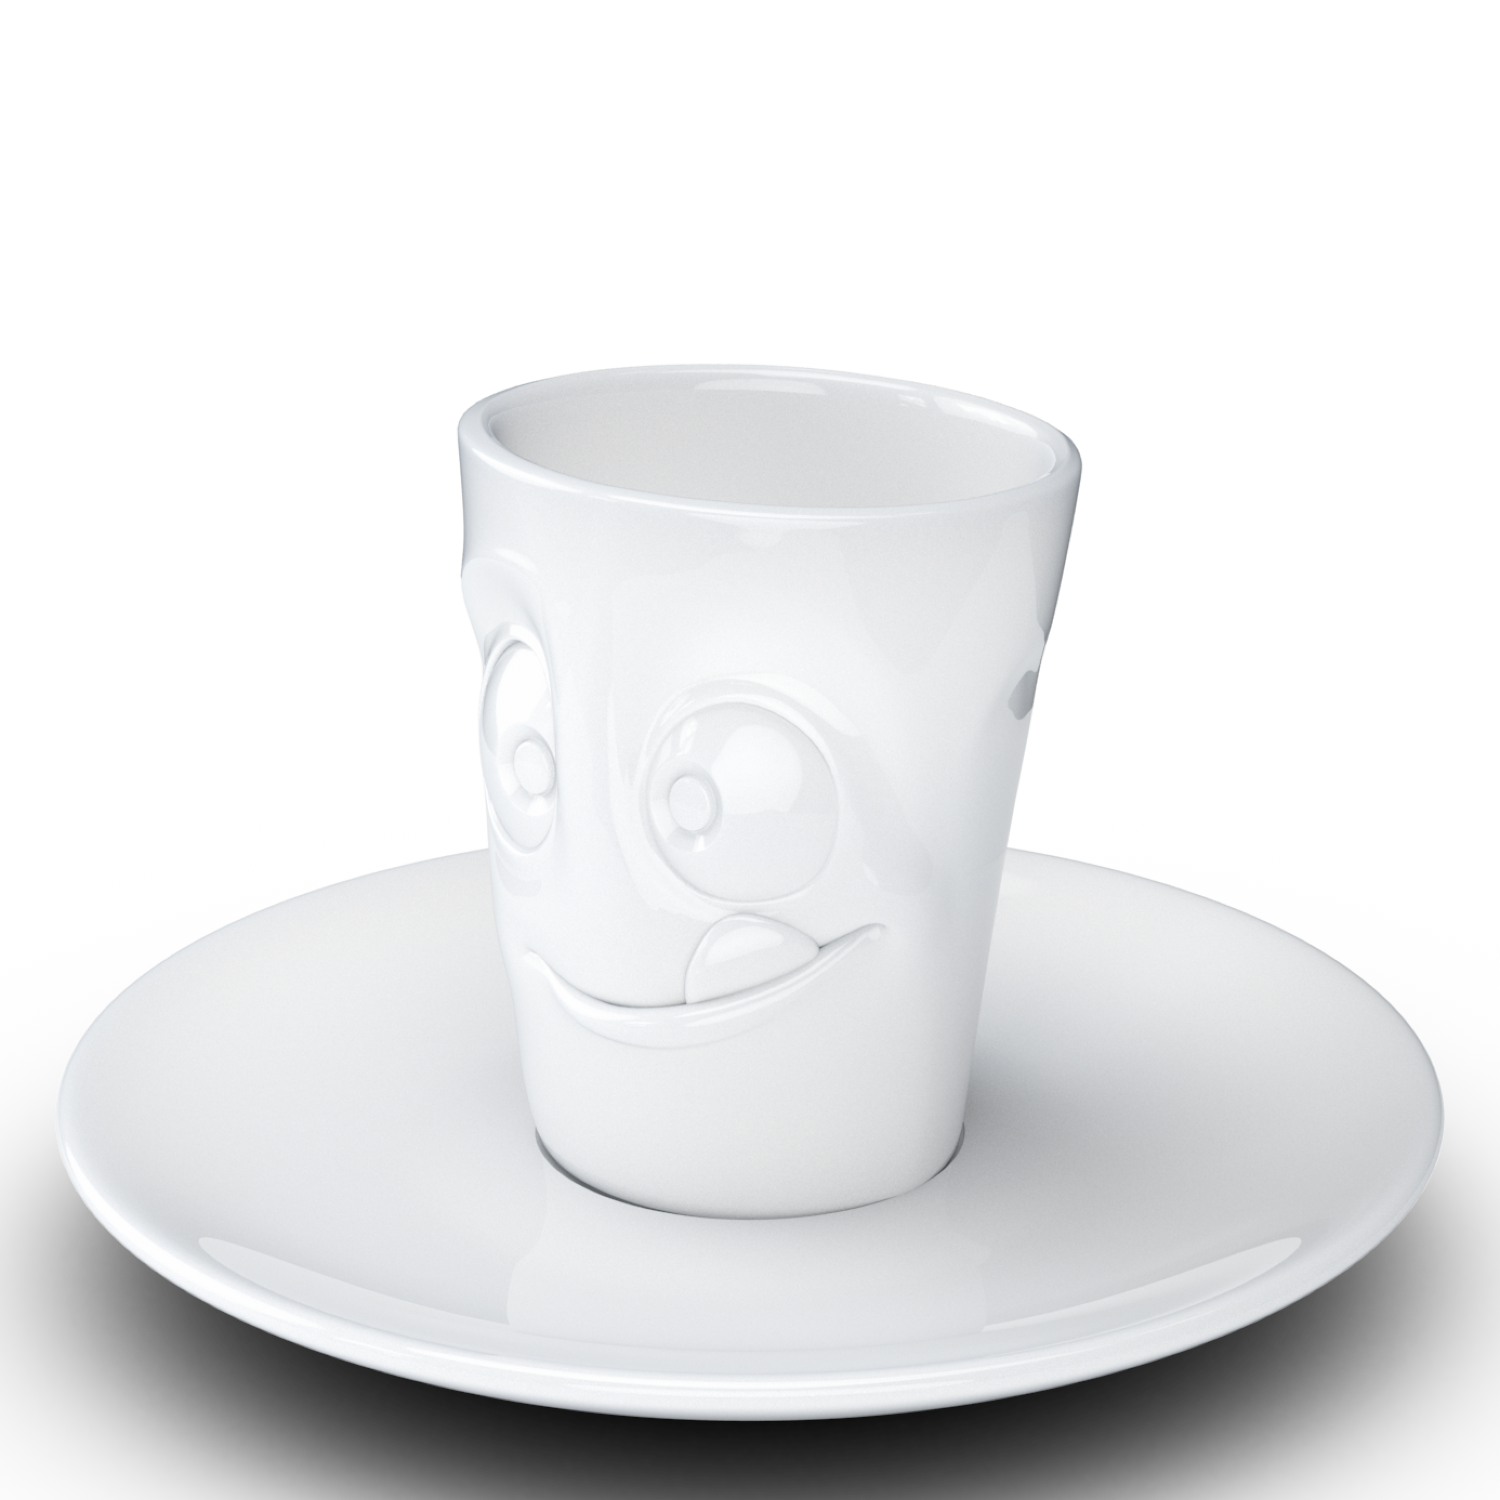 T021401 tasse expresso visage delicieux gourmand mug humeur tassen 58products